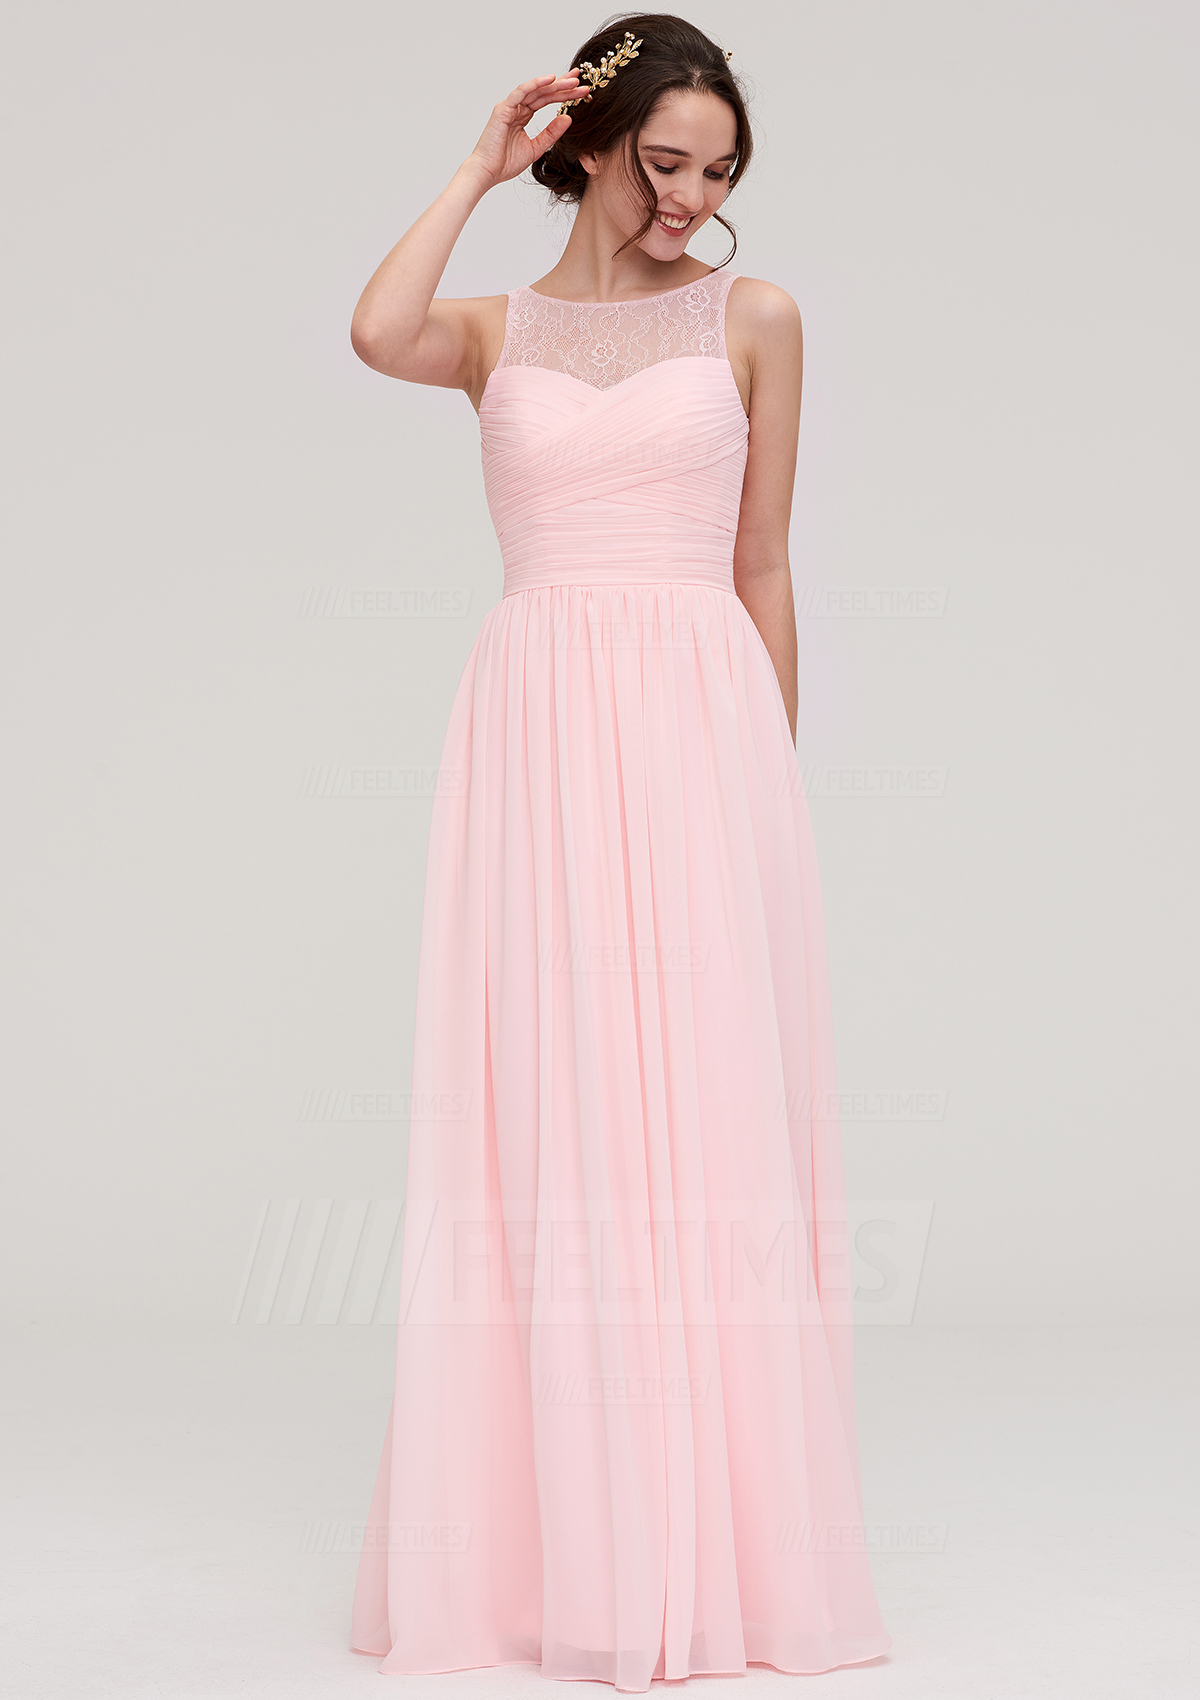 A-Line/Princess Bateau Sleeveless Long/Floor-Length Chiffon Bridesmaid Dress With Pleated Lace
